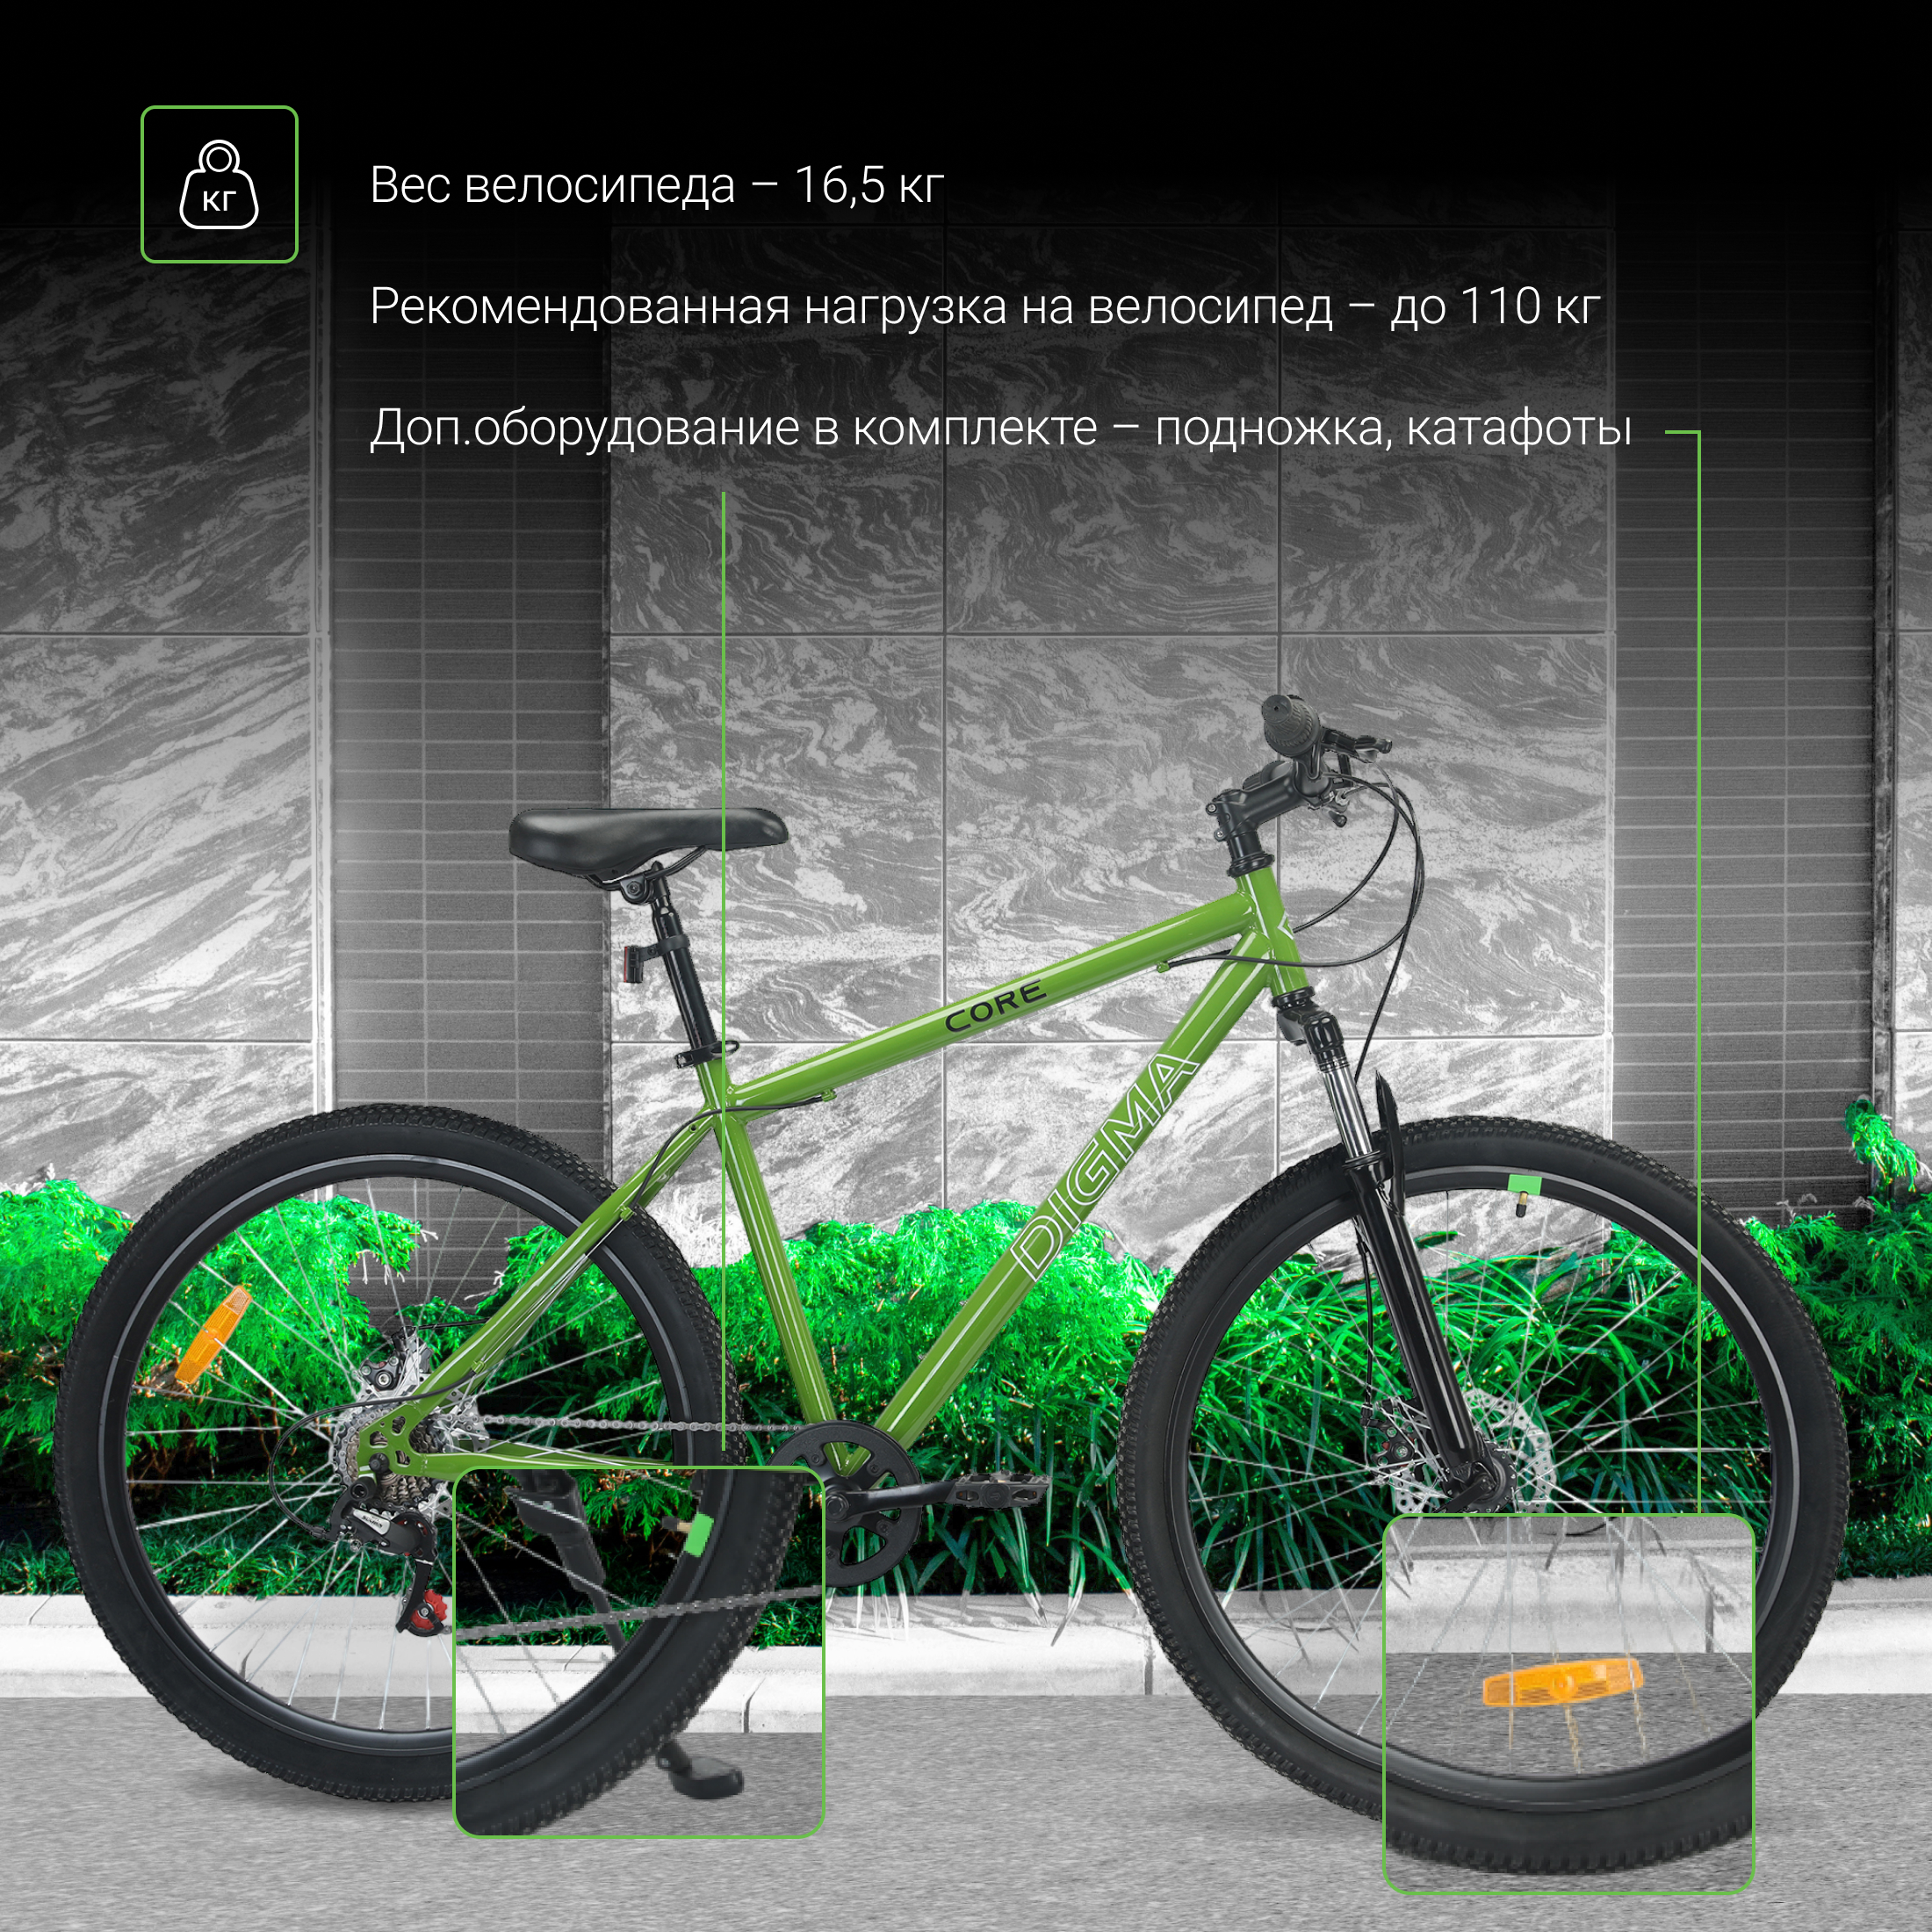 Велосипед Digma Core зеленый - фото 3